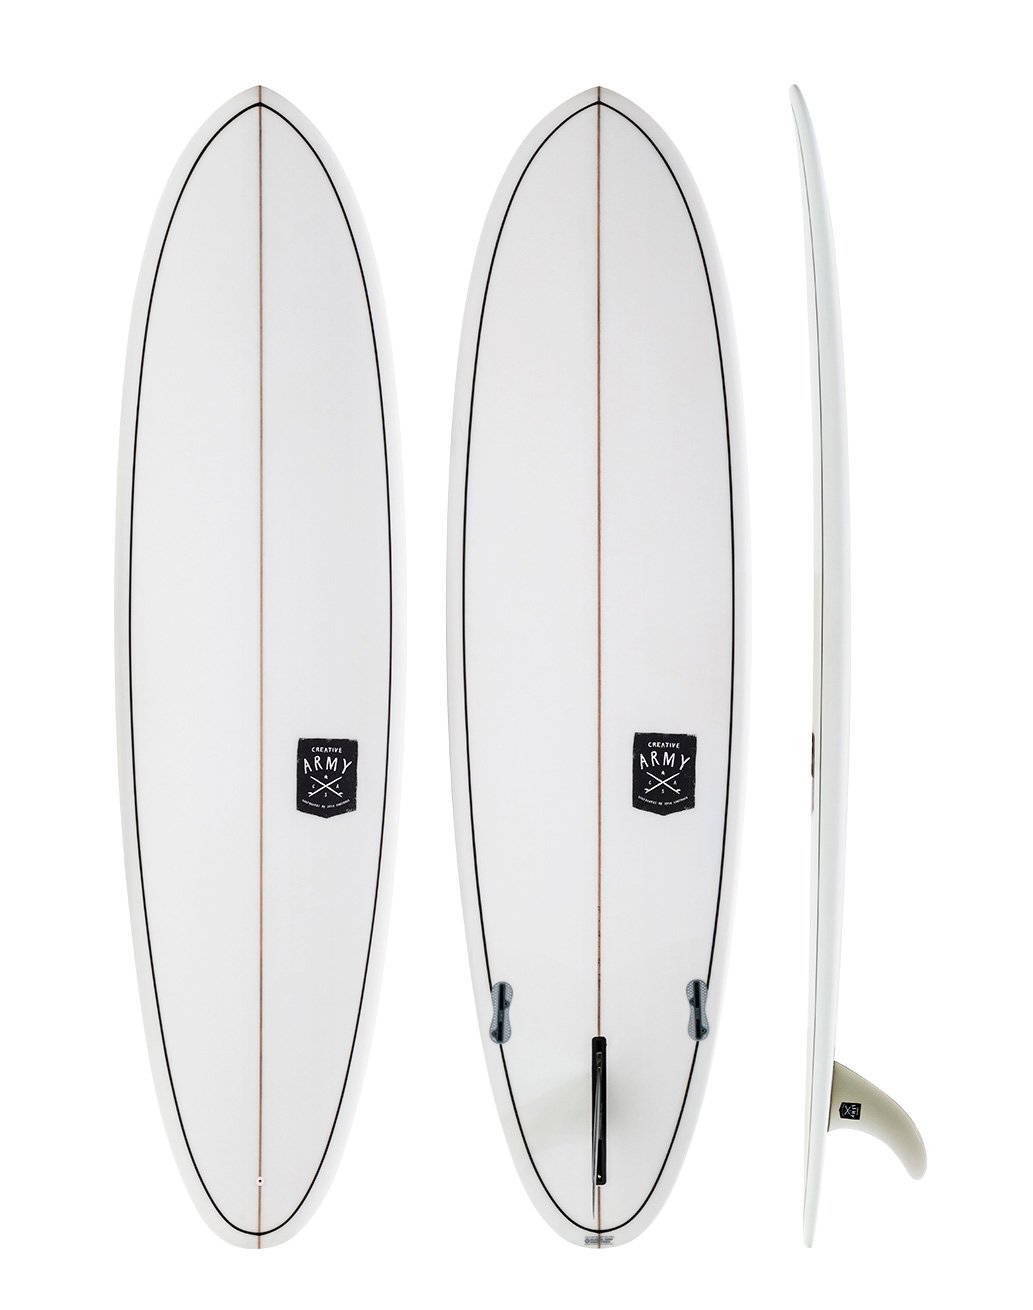 Creative Army Huevo - white mid length surfboard